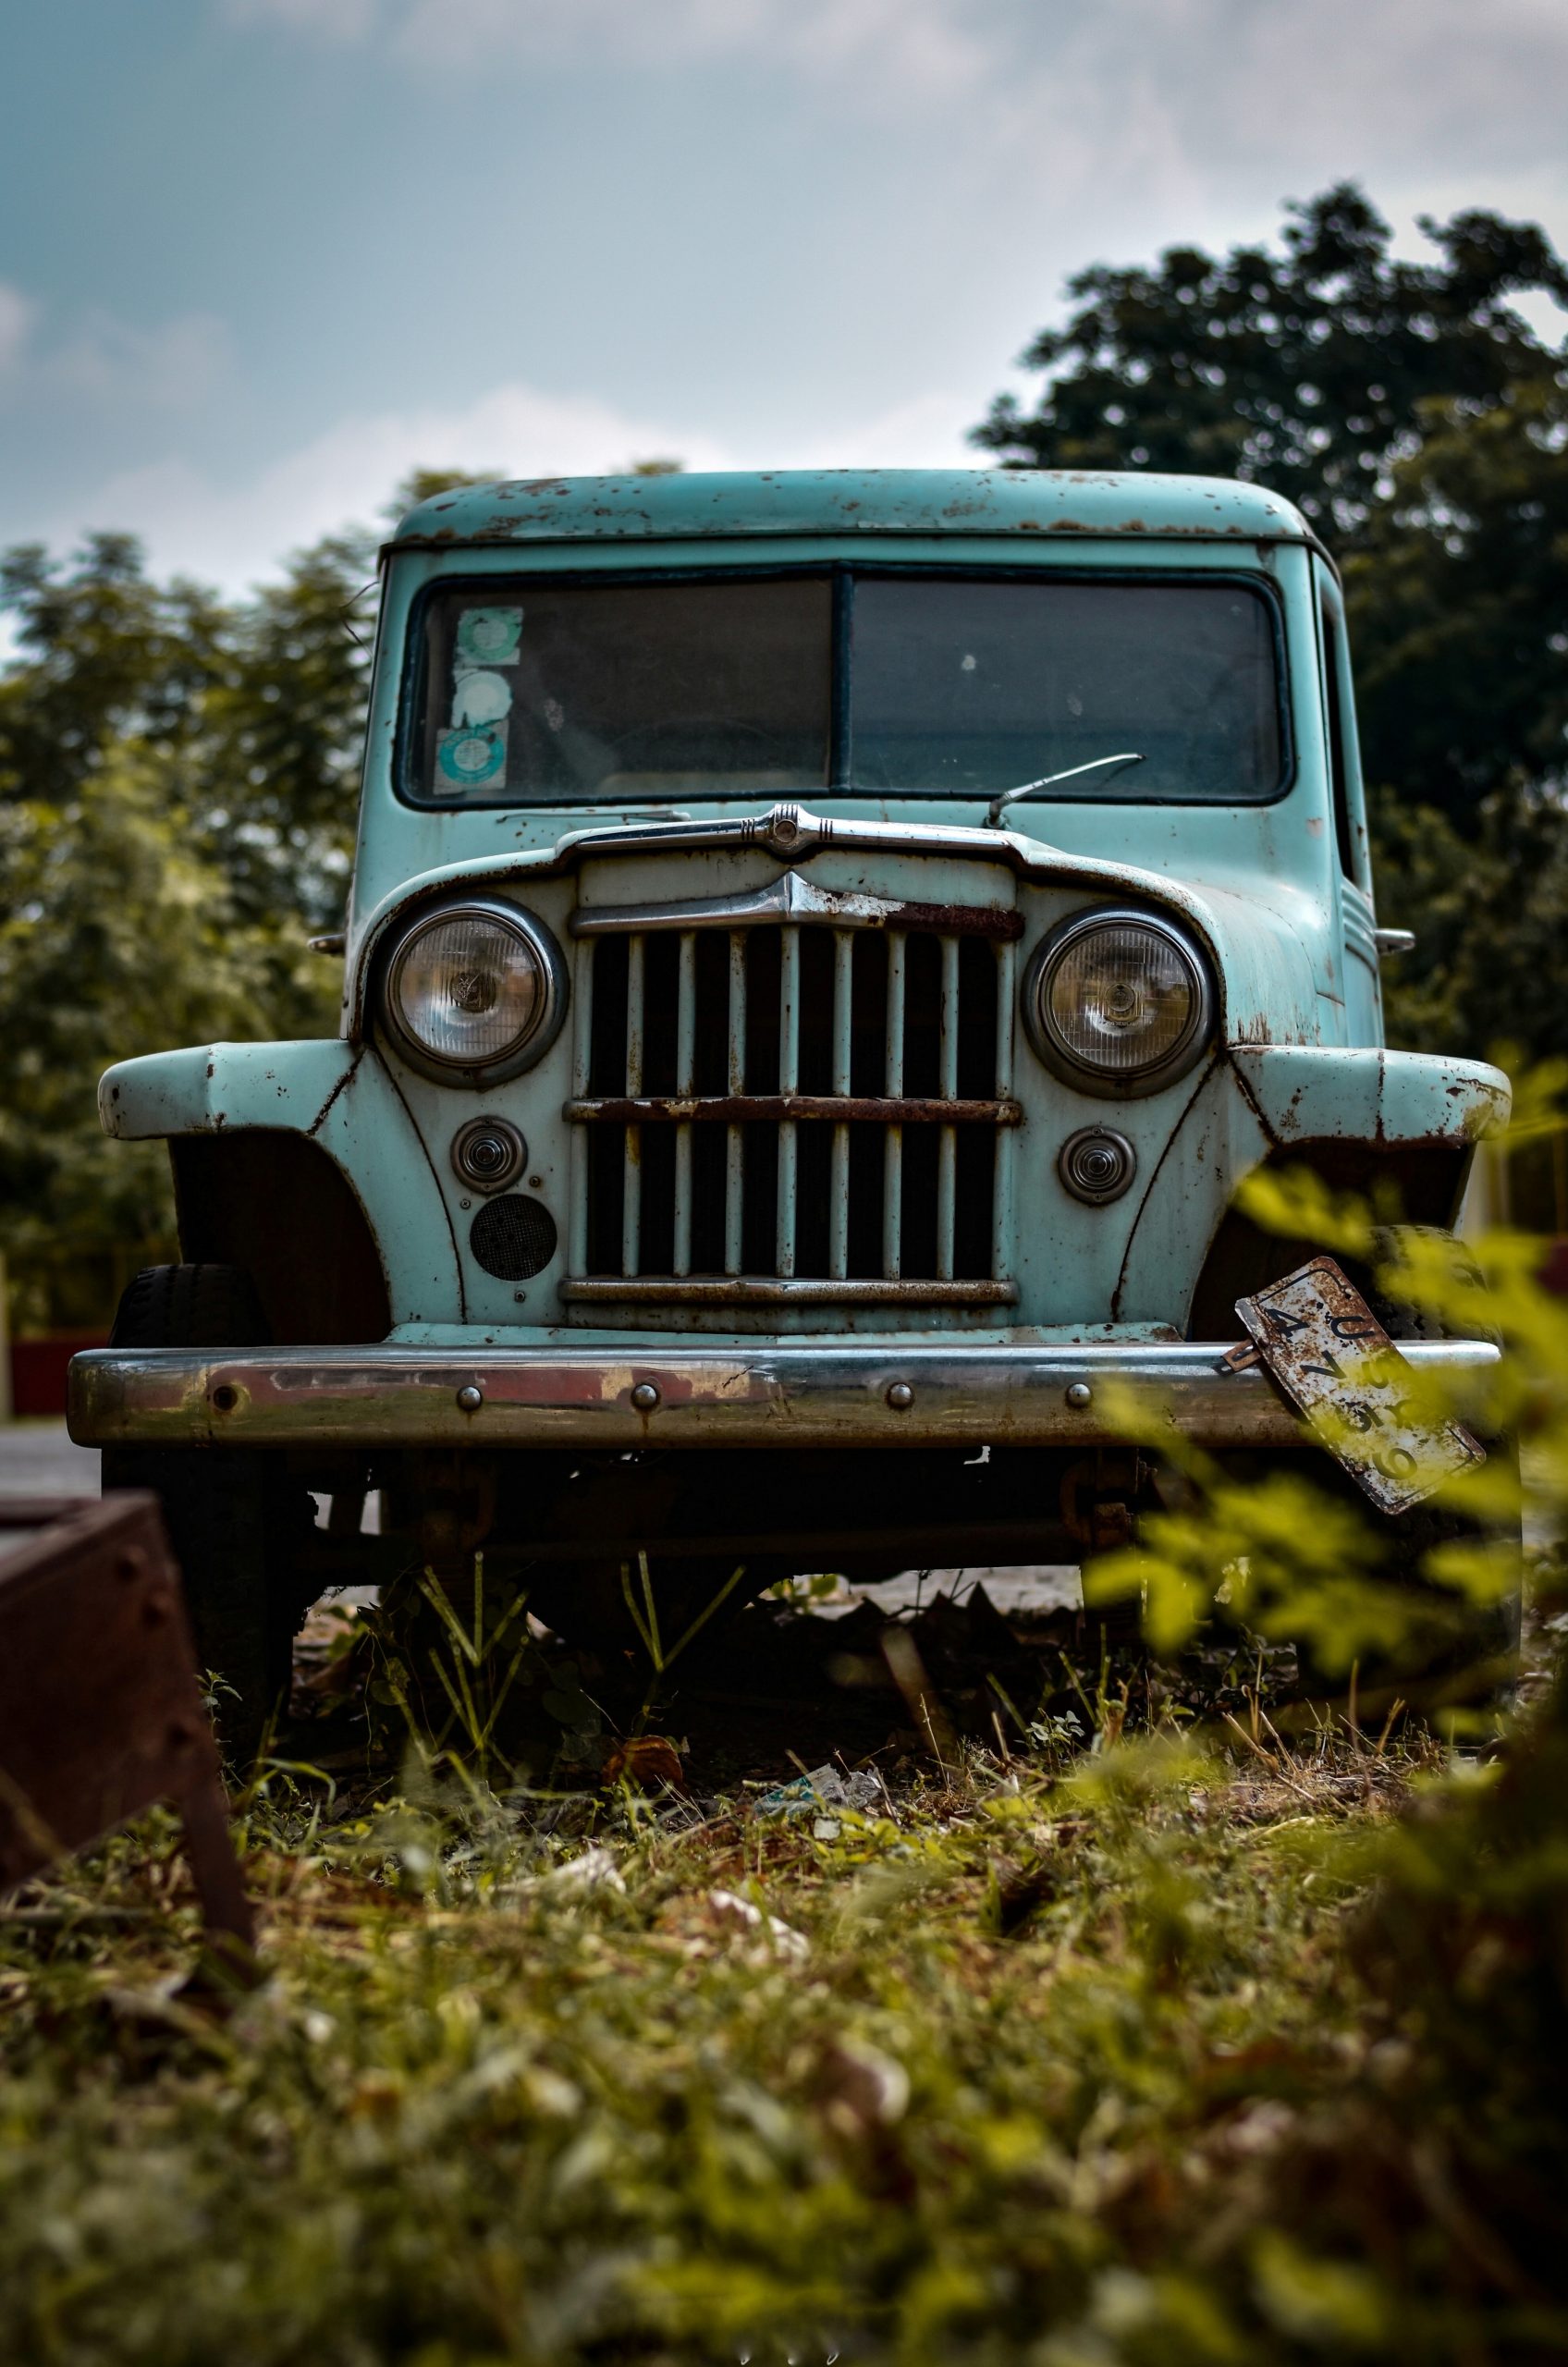 A vintage jeep